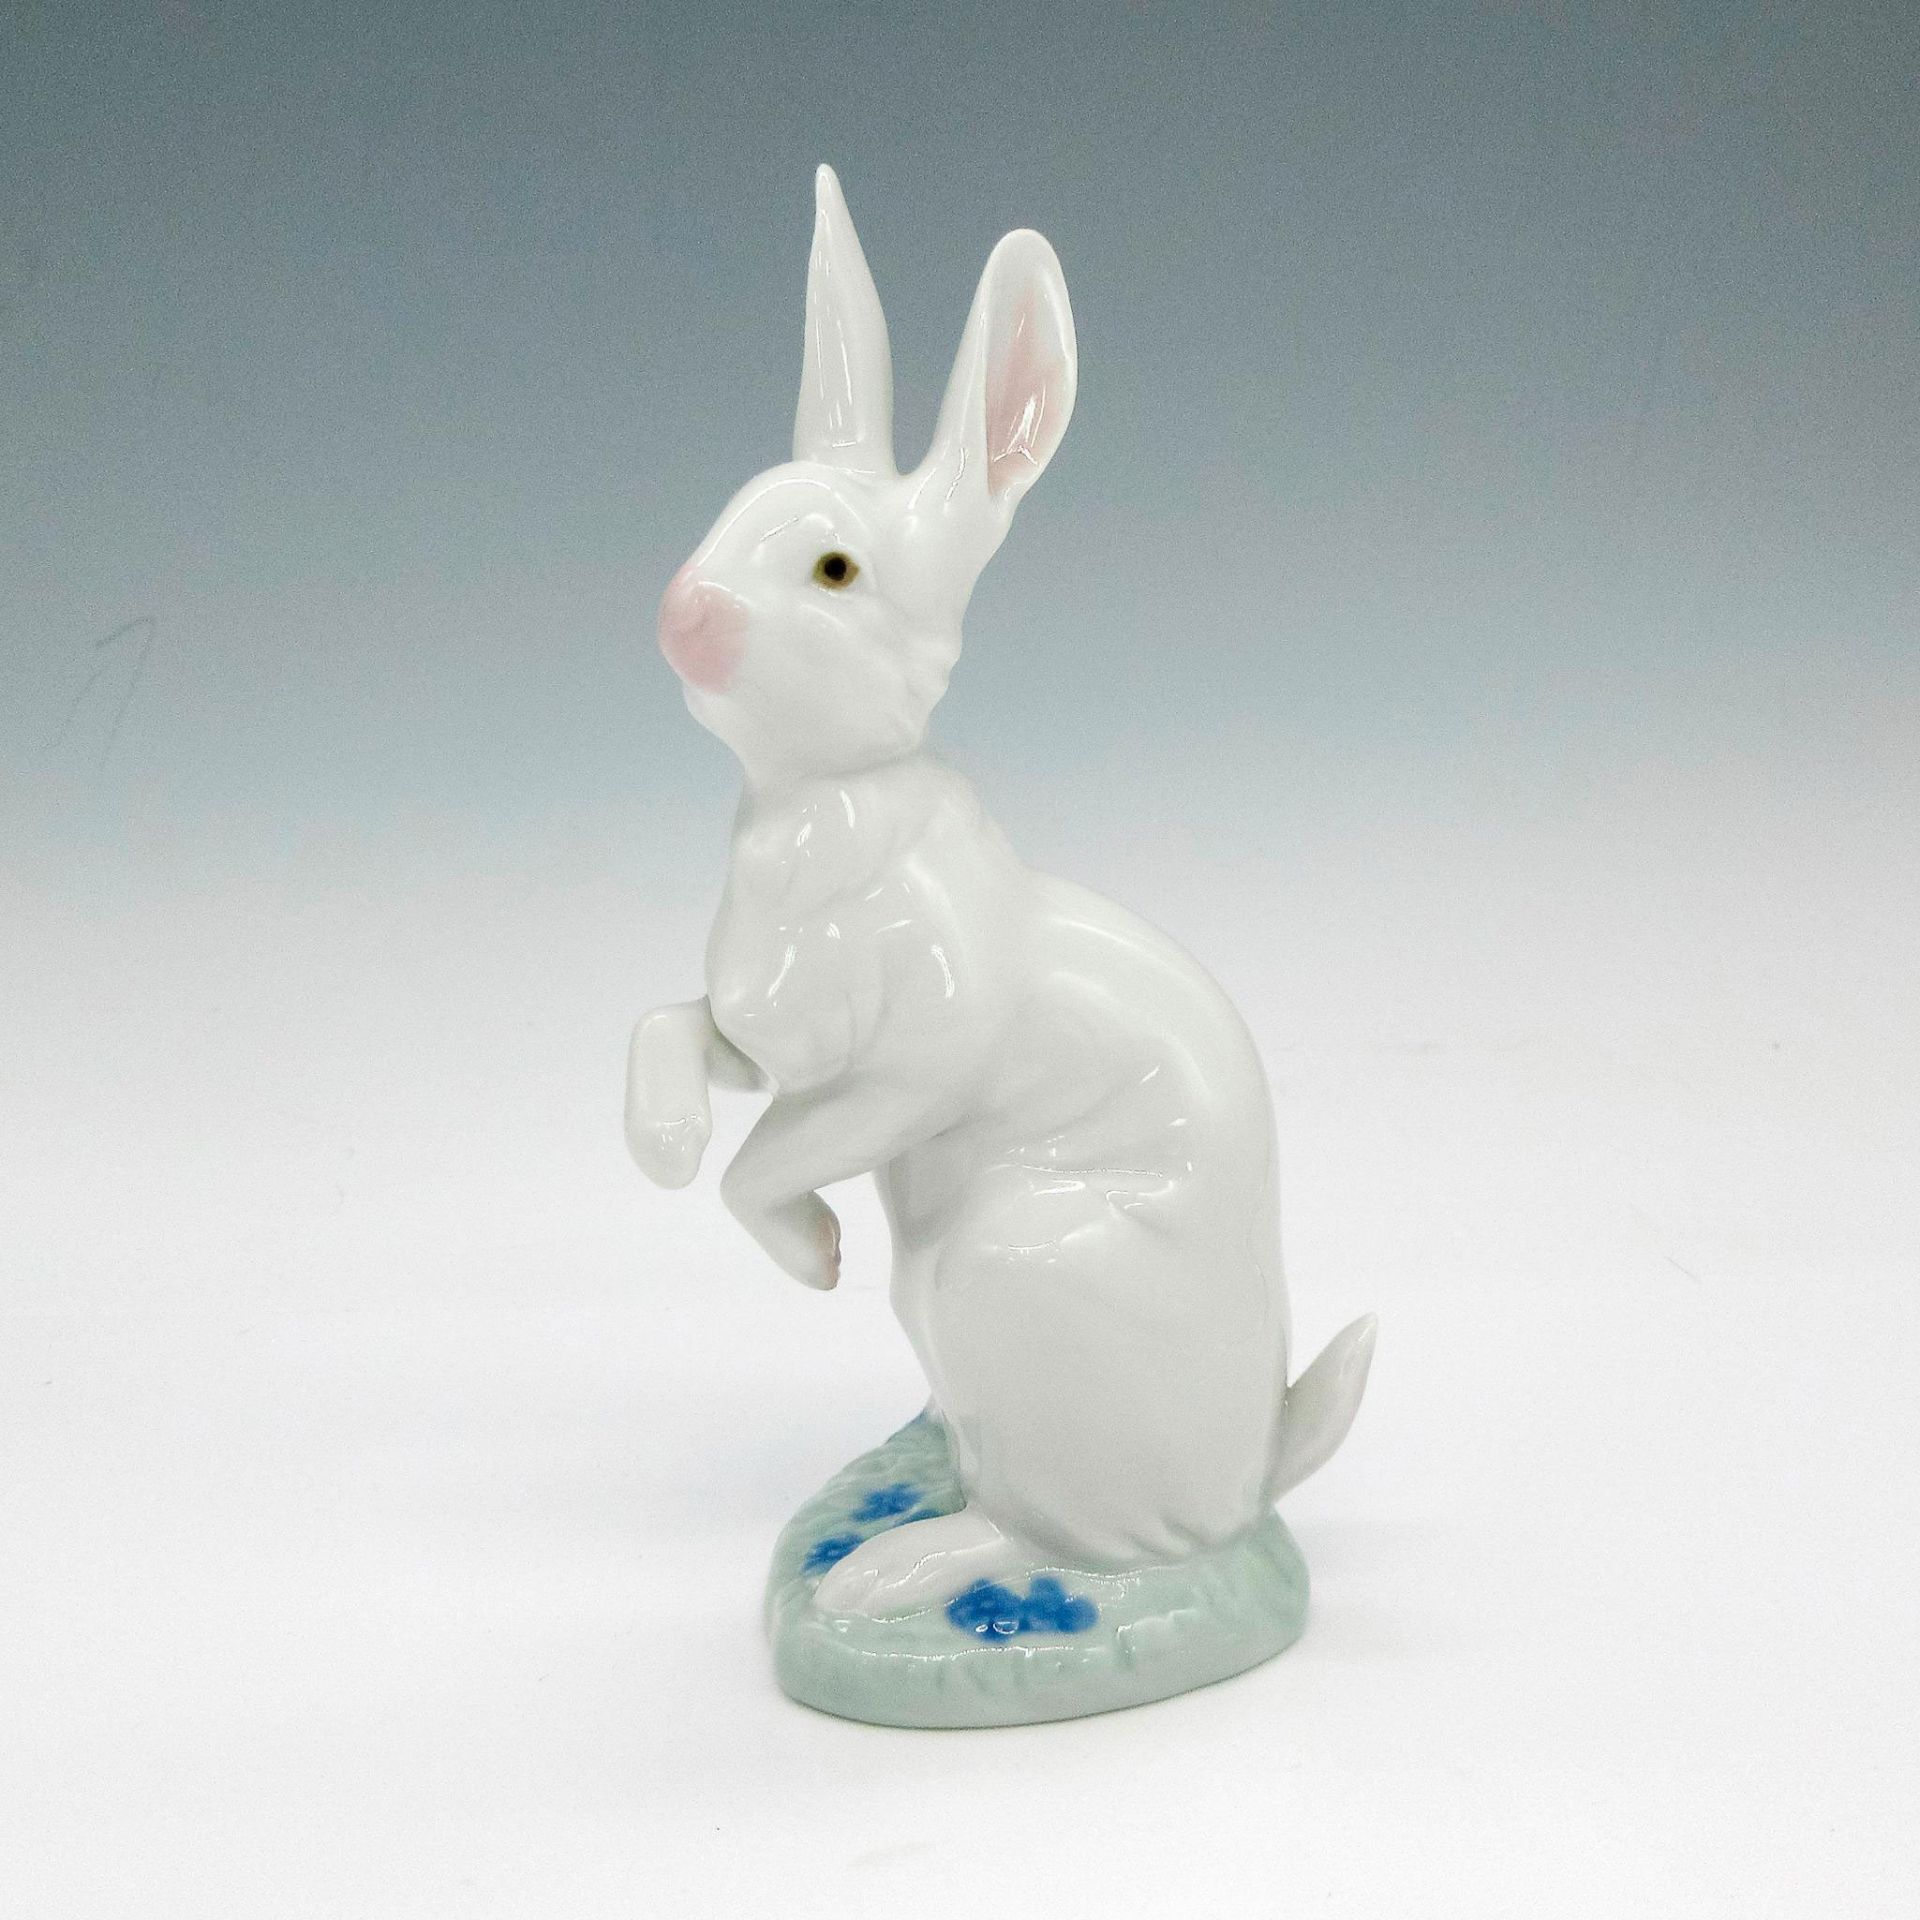 Hippity Hop 1005886 - Lladro Porcelain Figurine